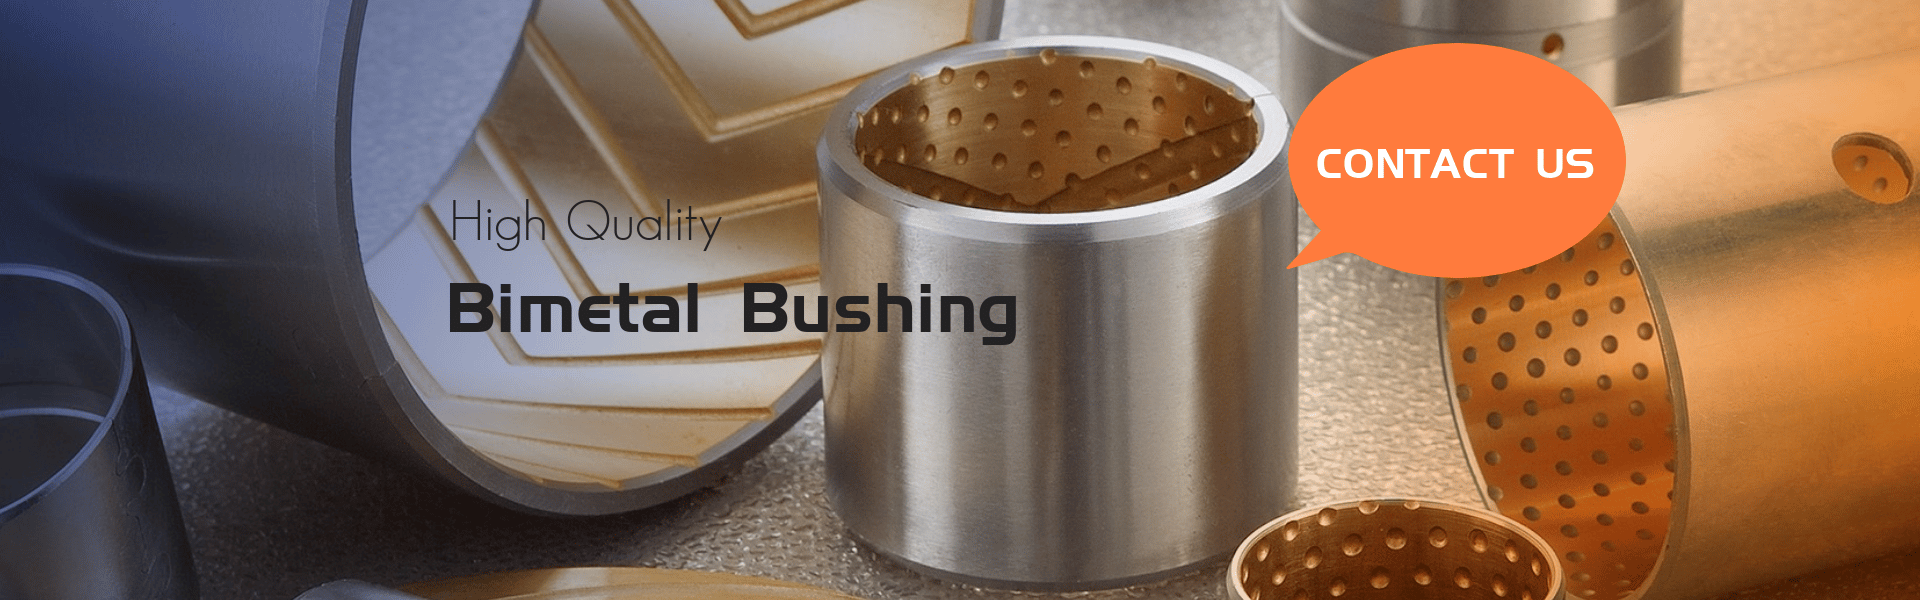 Bimetal bushing